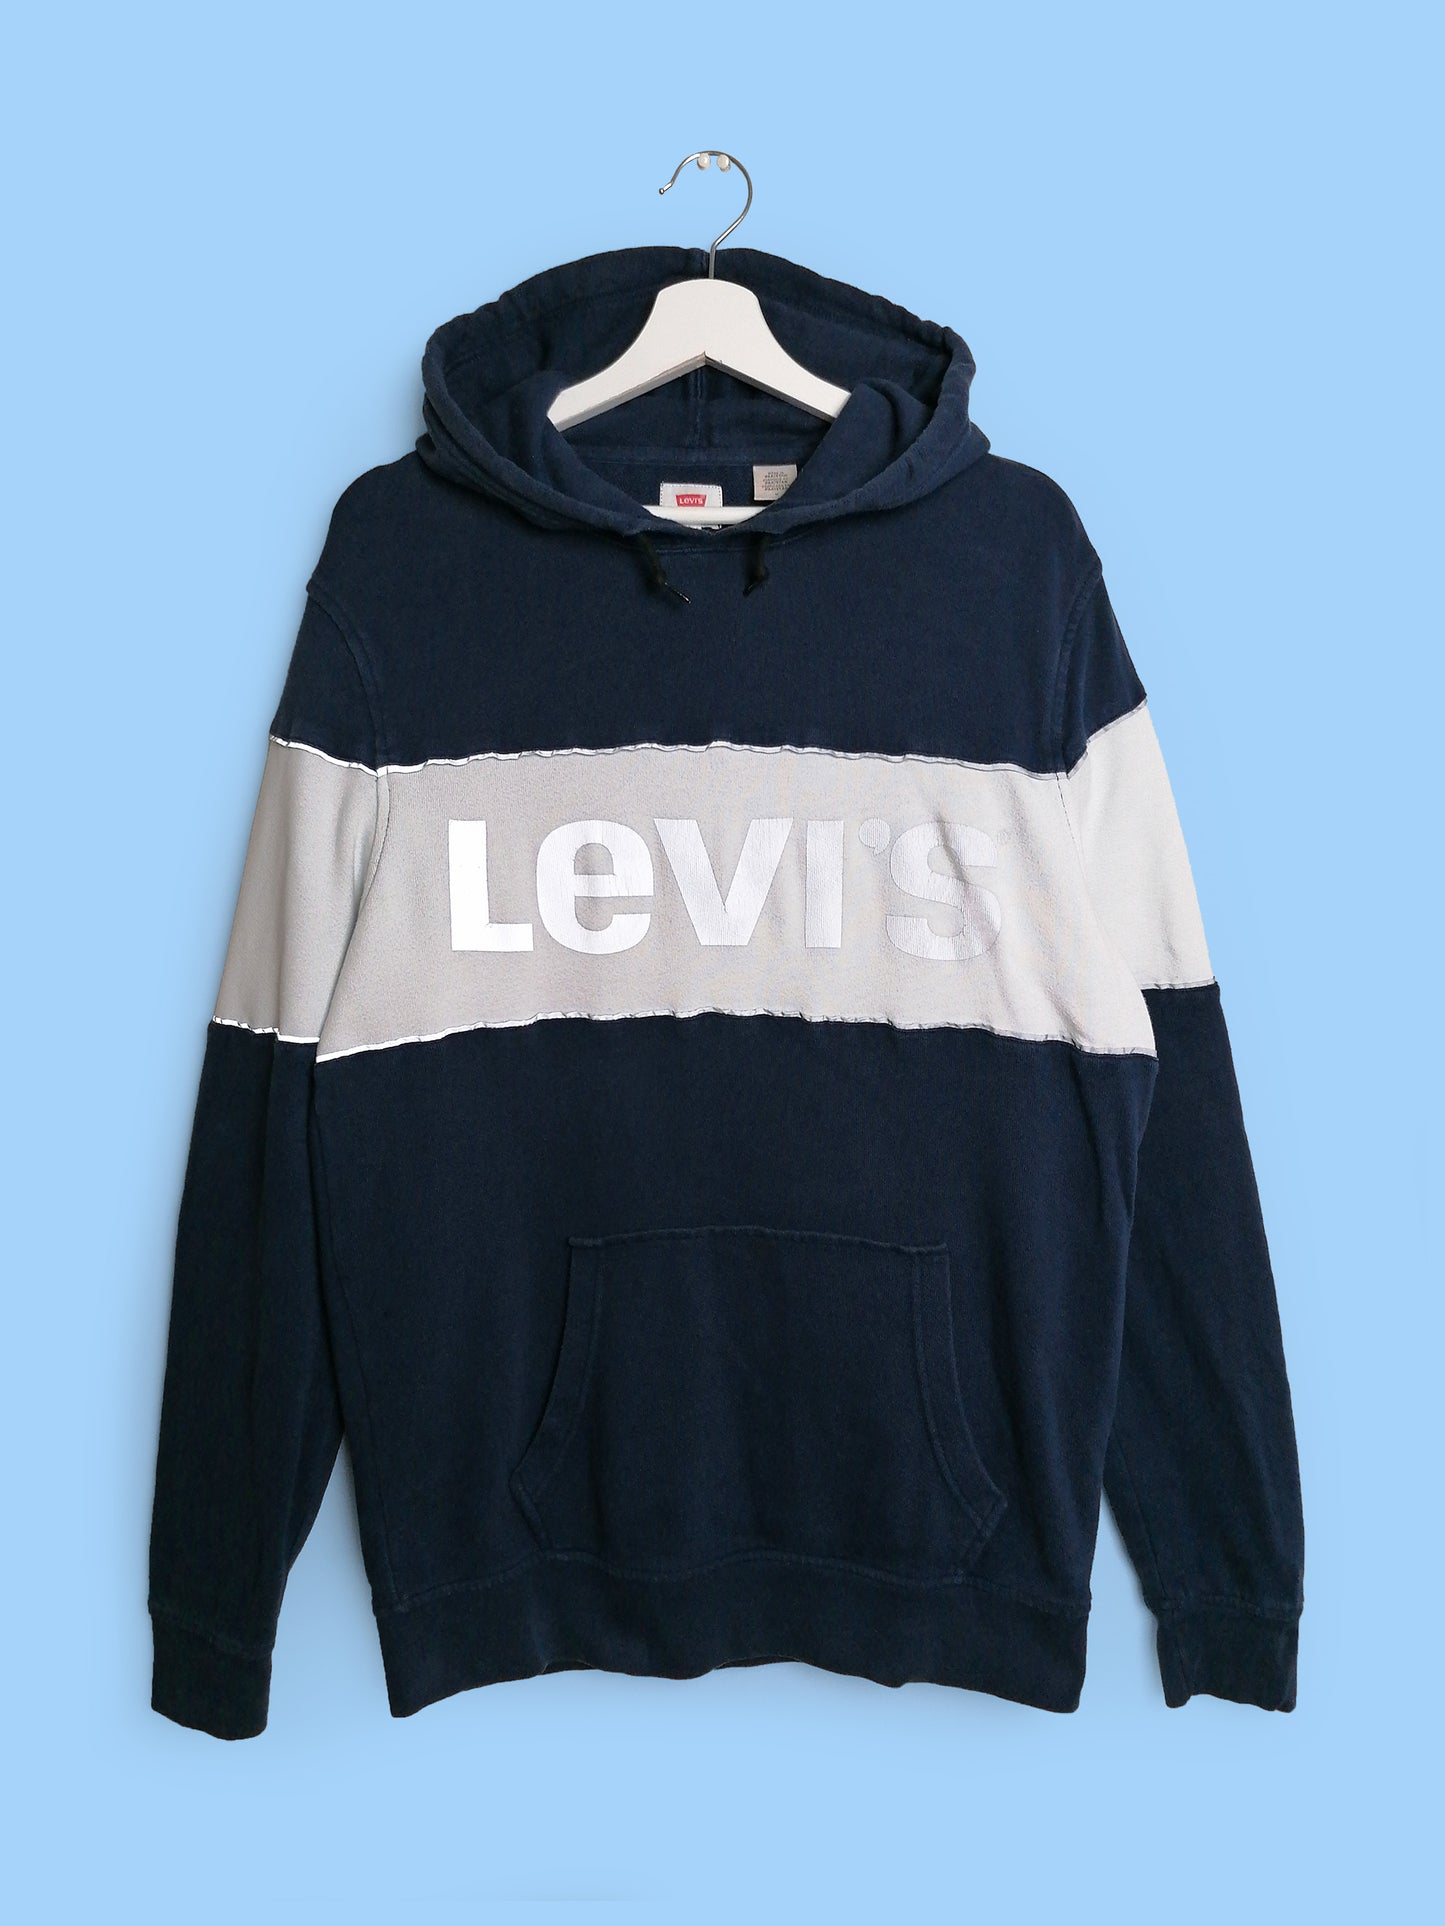 LEVI'S Hoodie Sweatshirt Reflective Logo - size M-L